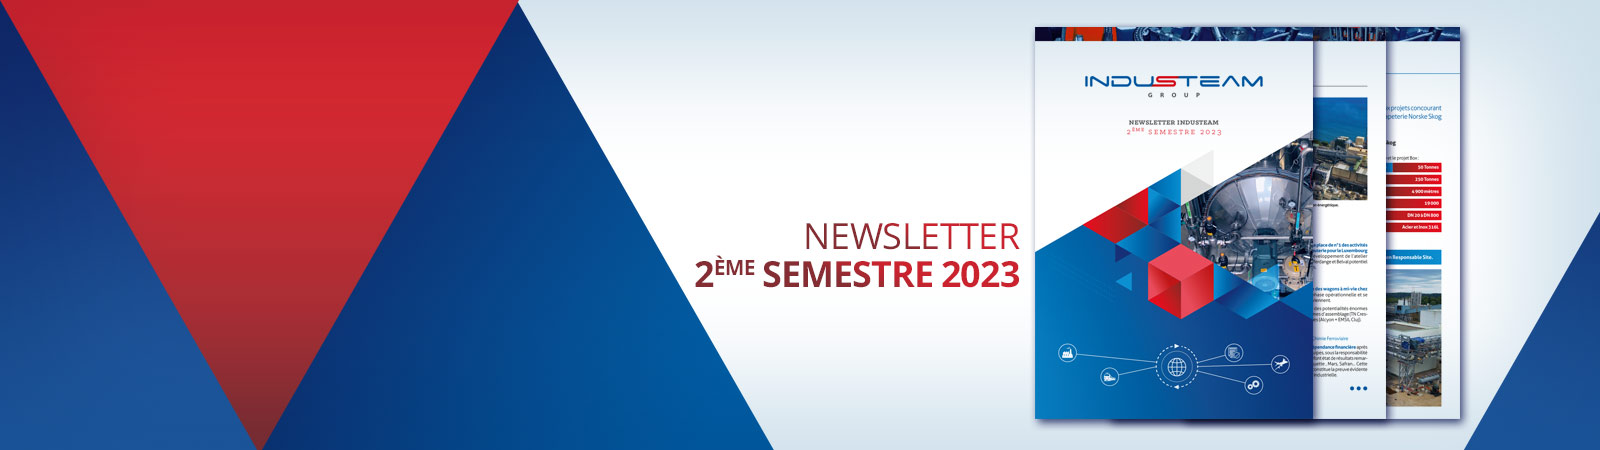 Newsletter 2ème semestre 2023